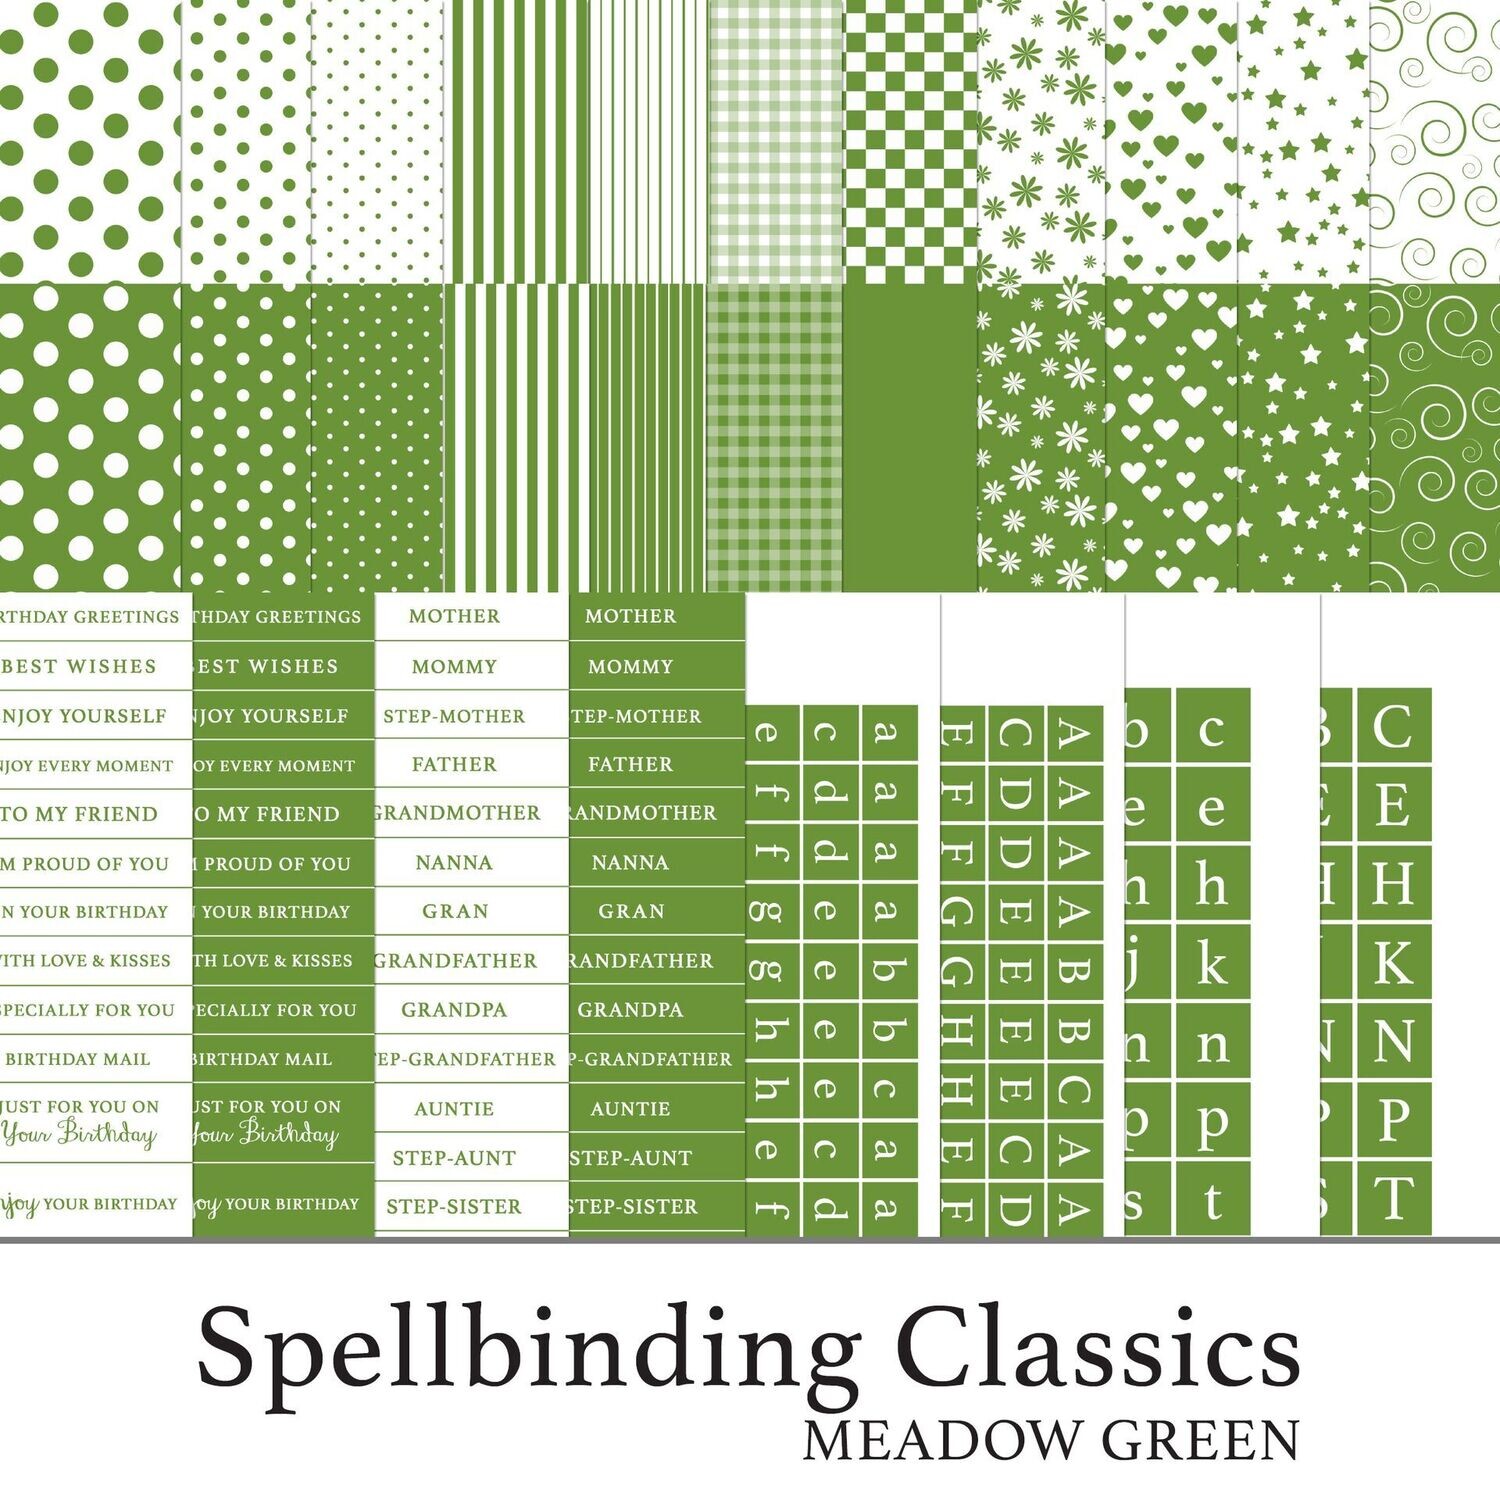 Spellbinding Classics Greens Meadow Green Digital Kit